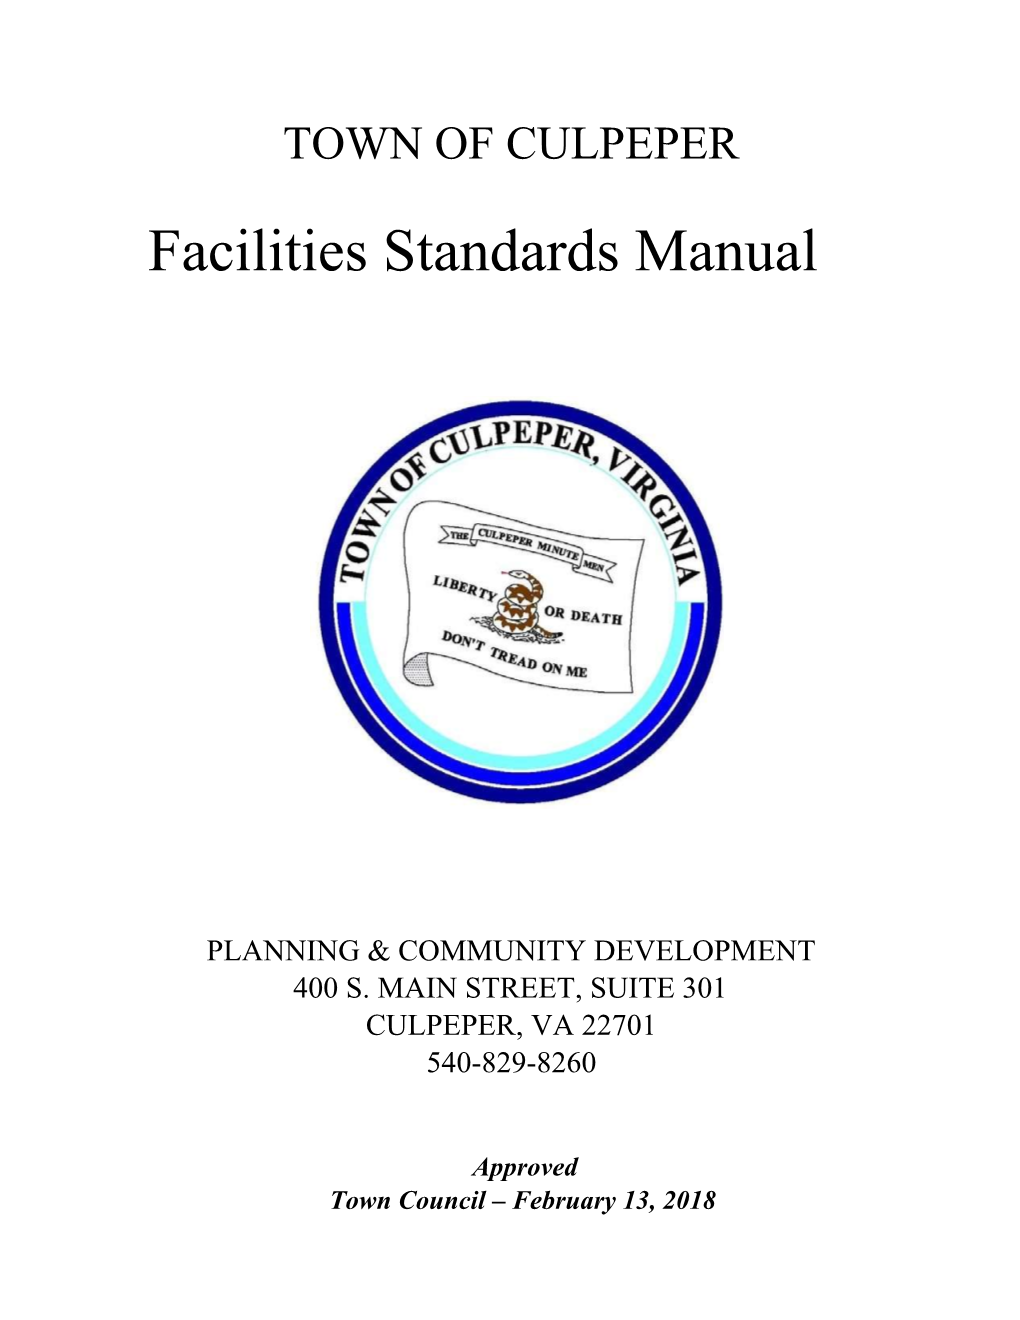 Facilities Standards Manual